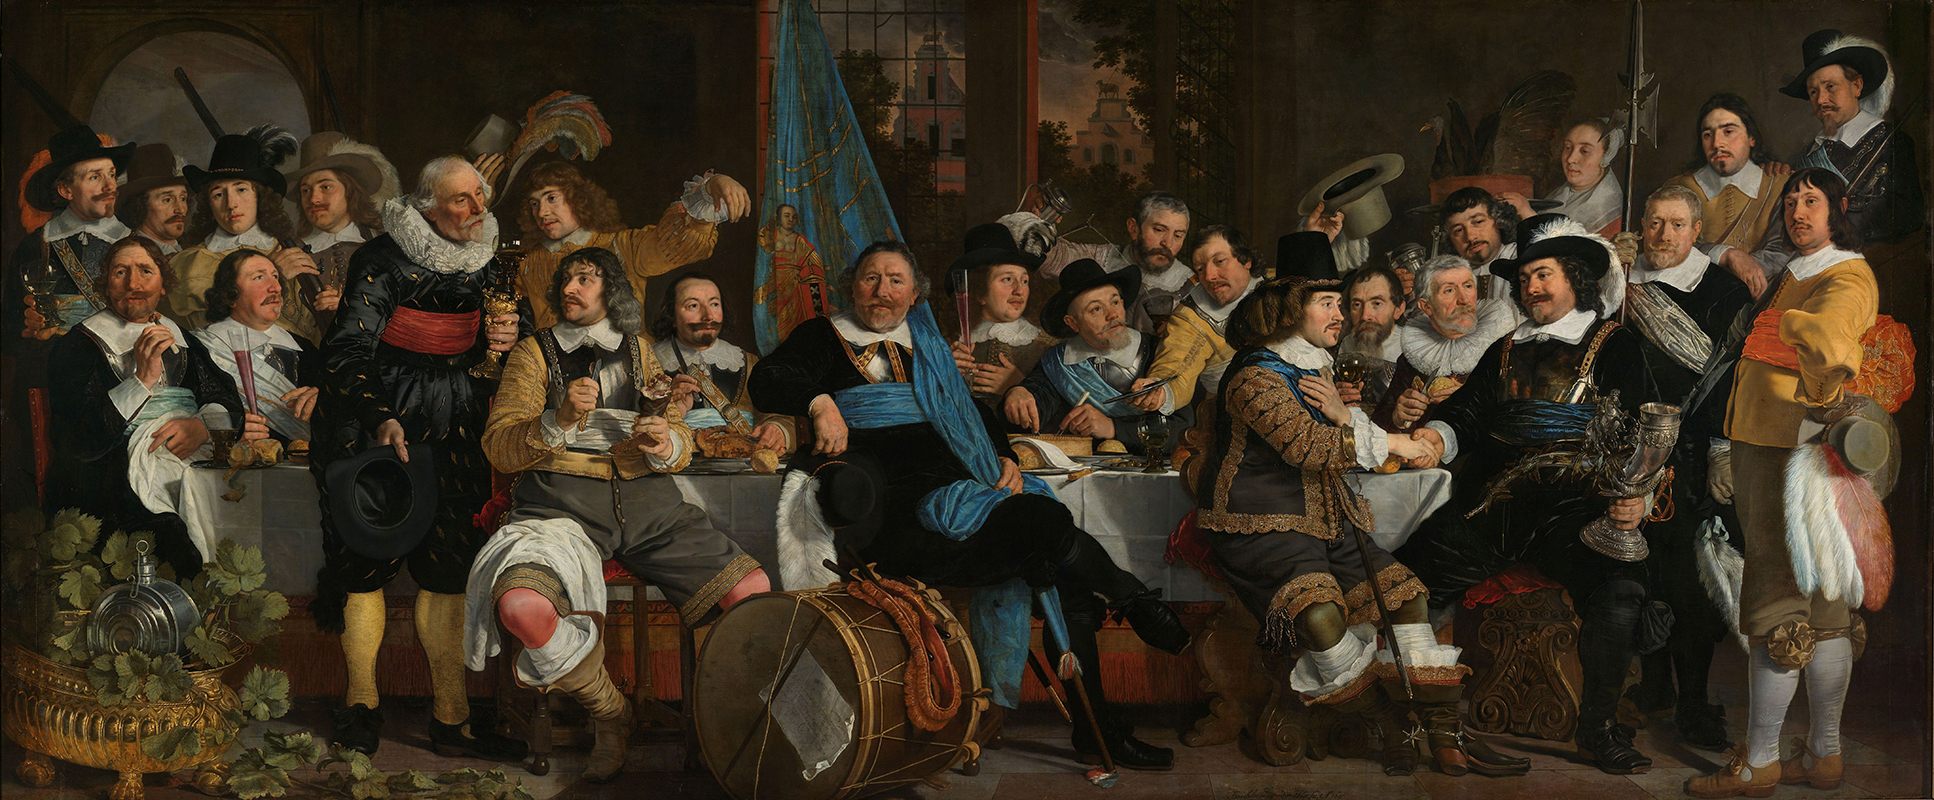 Rijksmuseum-Amsterdam-Golden Age-van der Helst-painting-Gallery of Honour